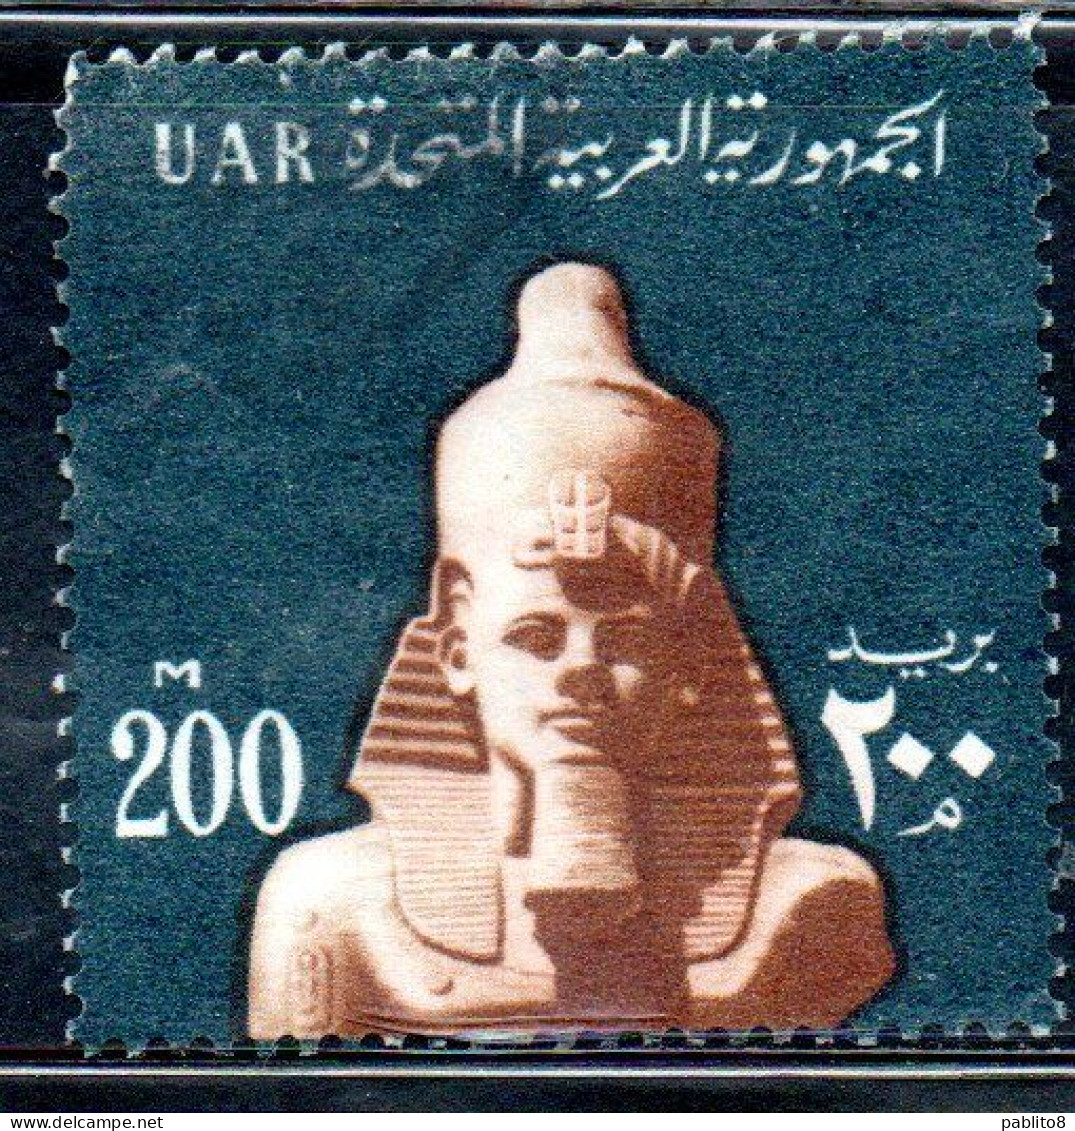 UAR EGYPT EGITTO 1964 1967 HEAD C.F. RAMSES II 200m USED USATO OBLITERE' - Oblitérés